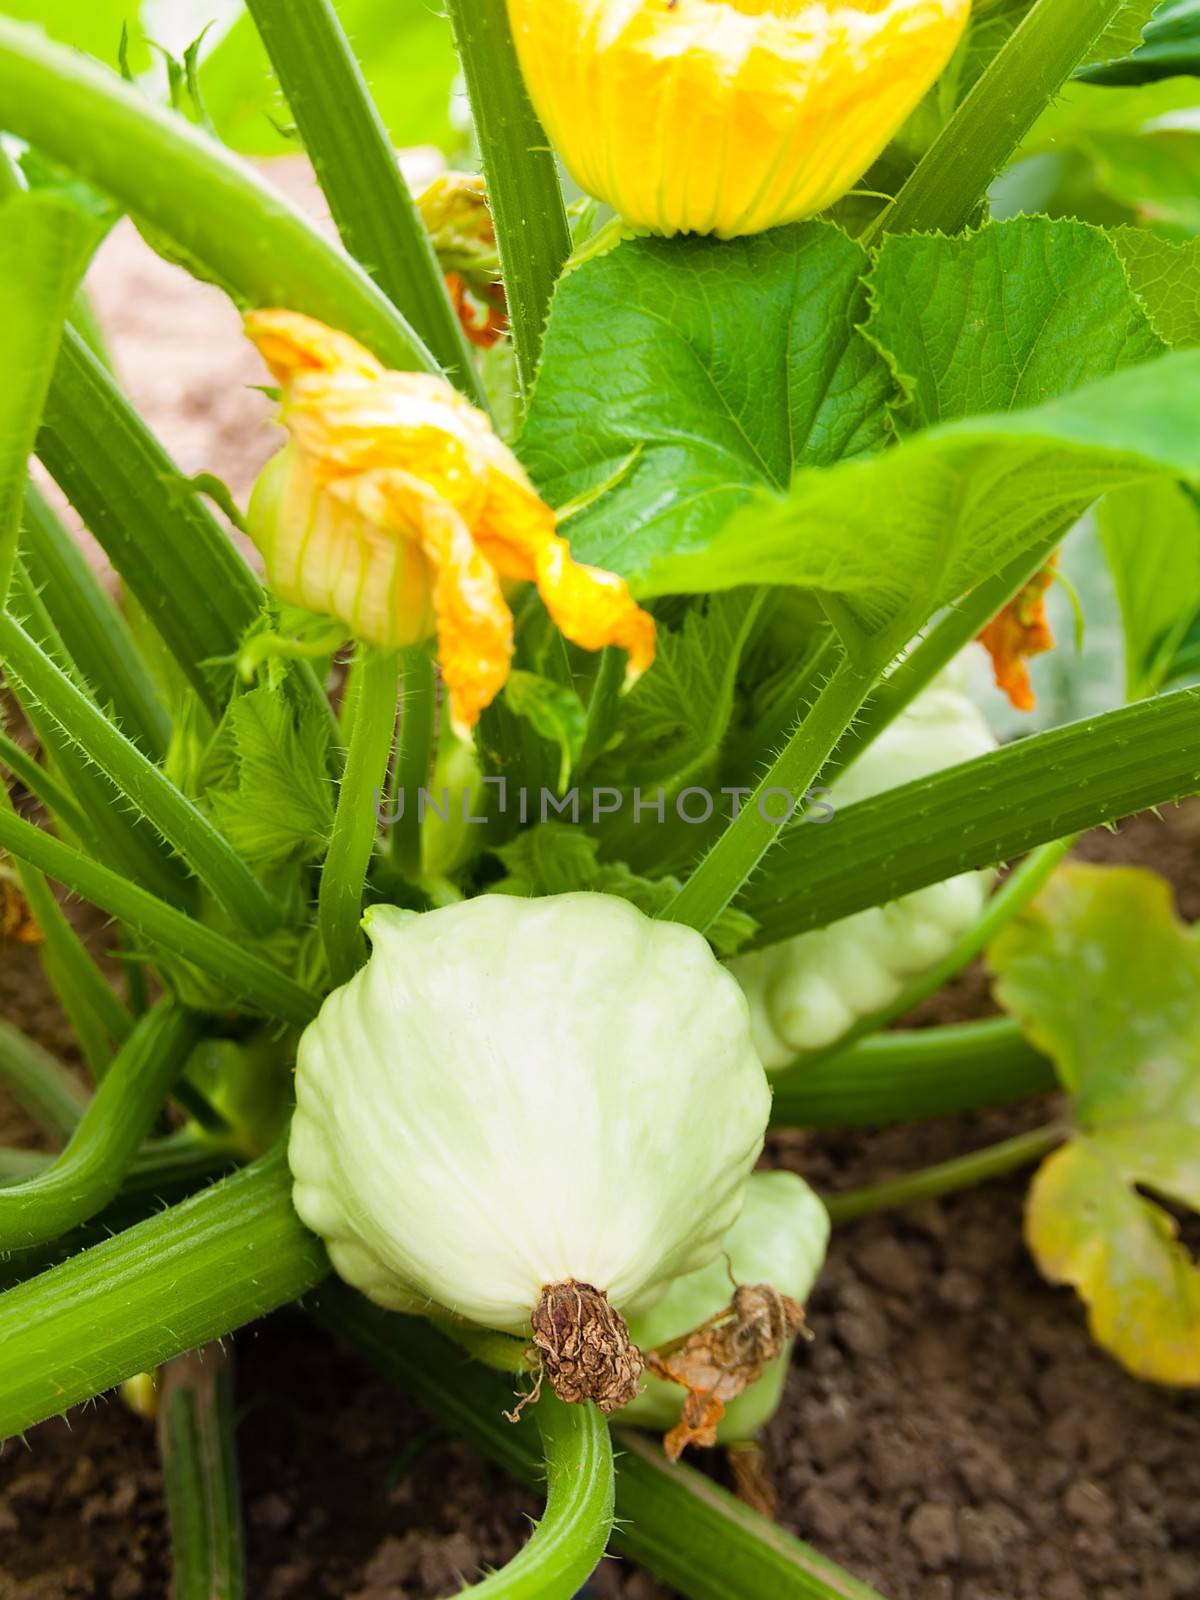 Pattypan squash growing on vegetable bed. Custard marrow - a pla by motorolka